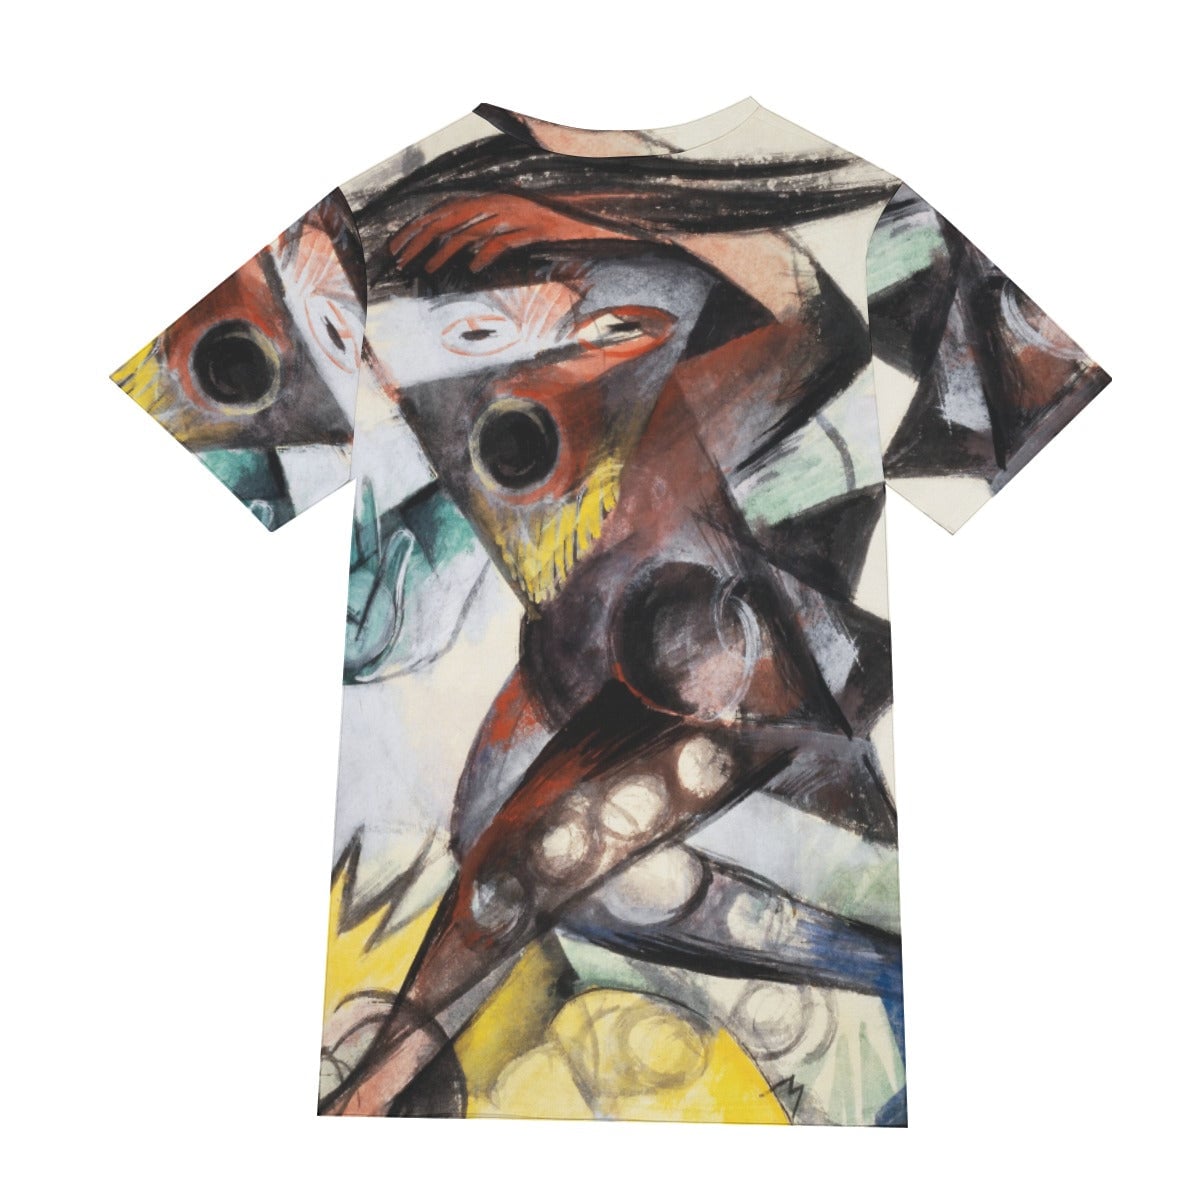 Franz Marc’s Caliban The Tempest T-Shirt - Artistic Tee